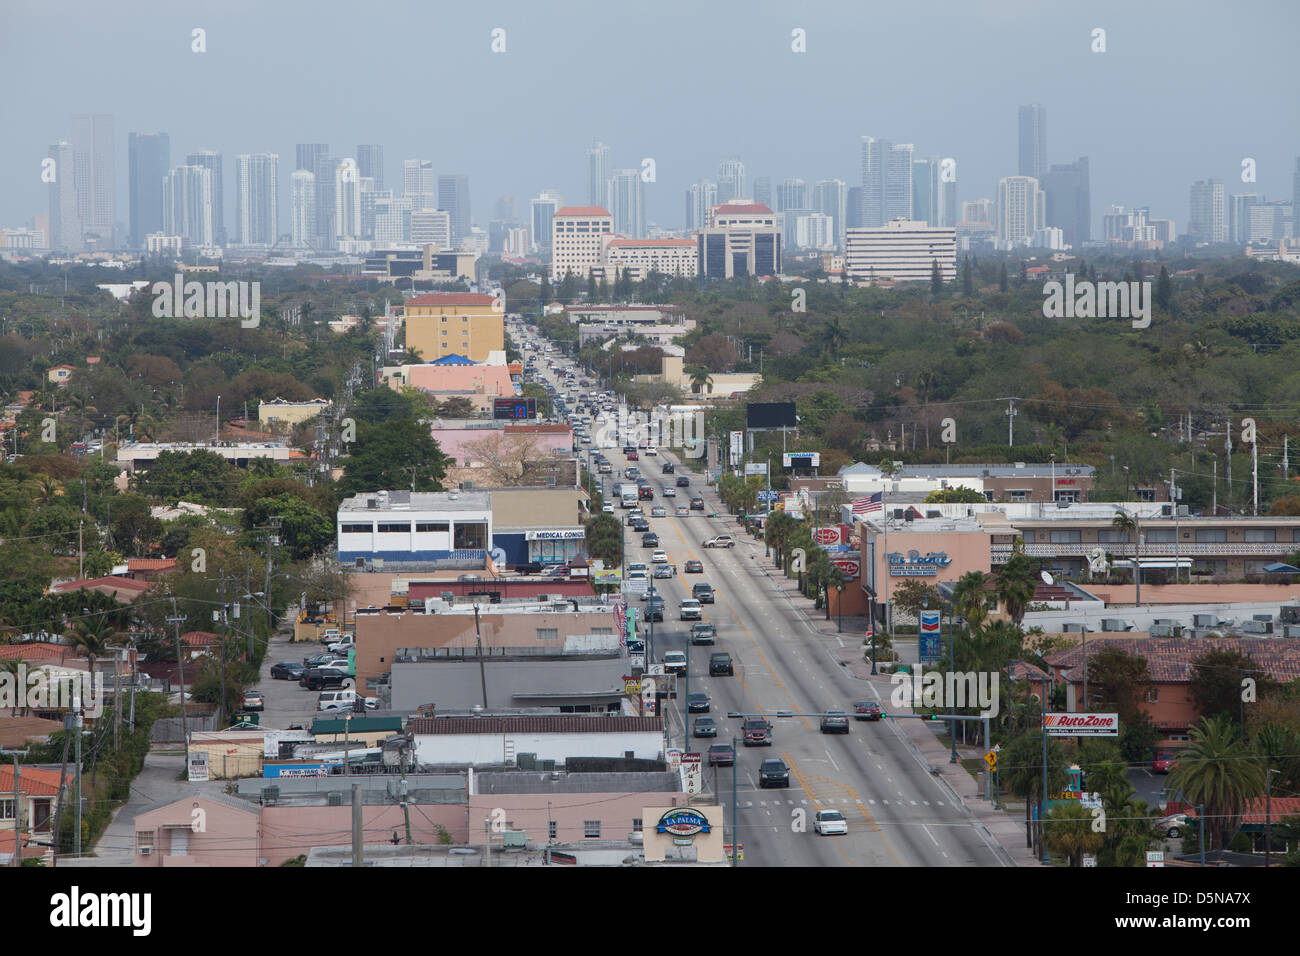 Miami Calle Ocho Miami South West 8 Street City of Miami Skyline Stock Photo